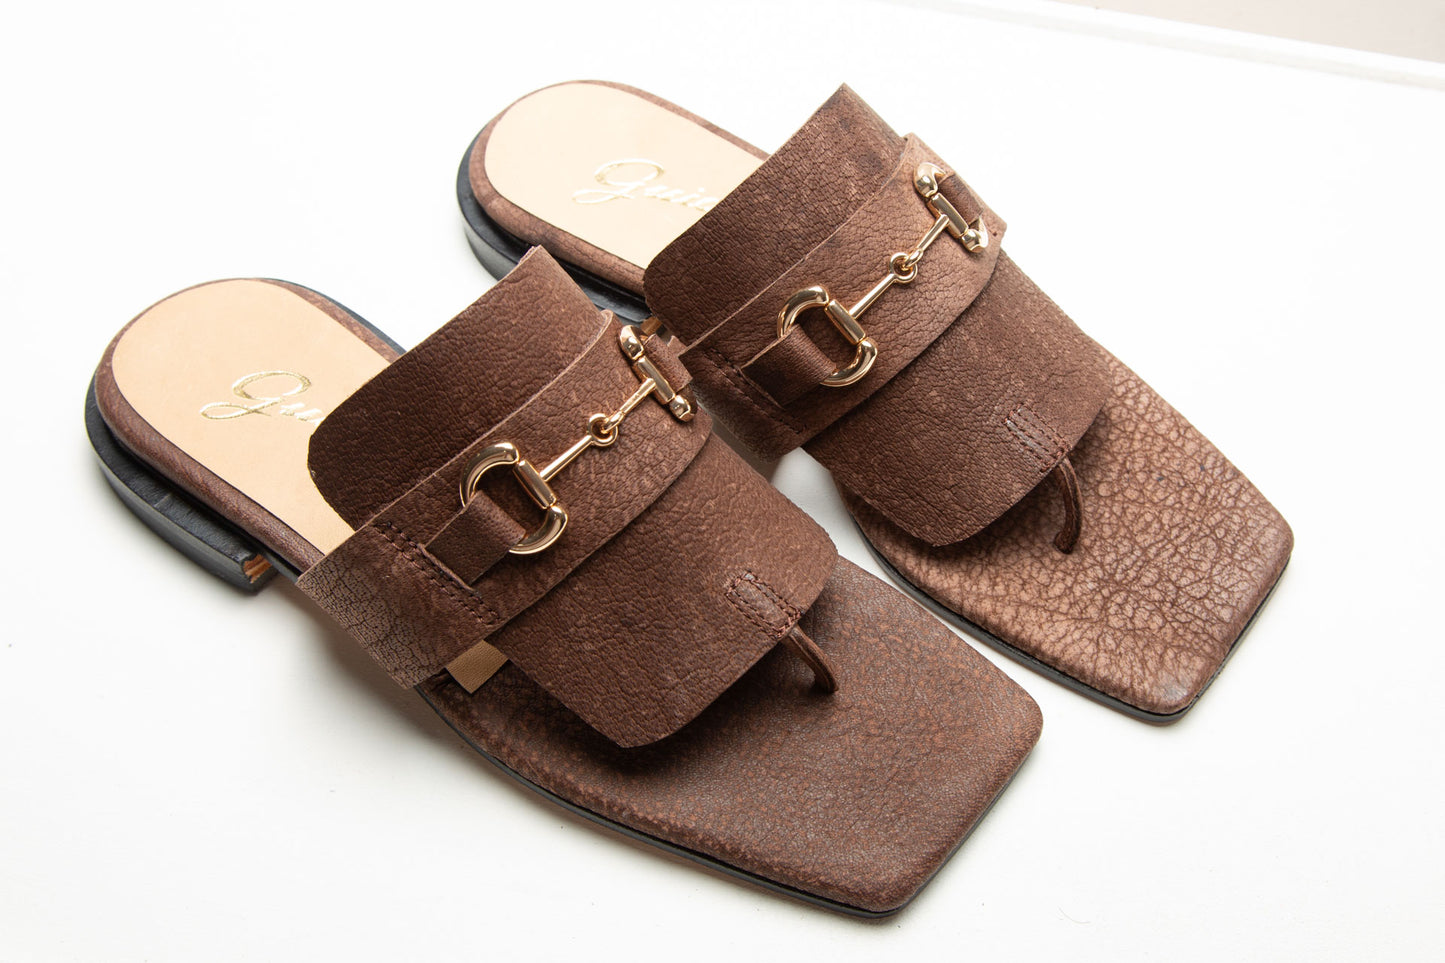 Sandal 62265 Brown